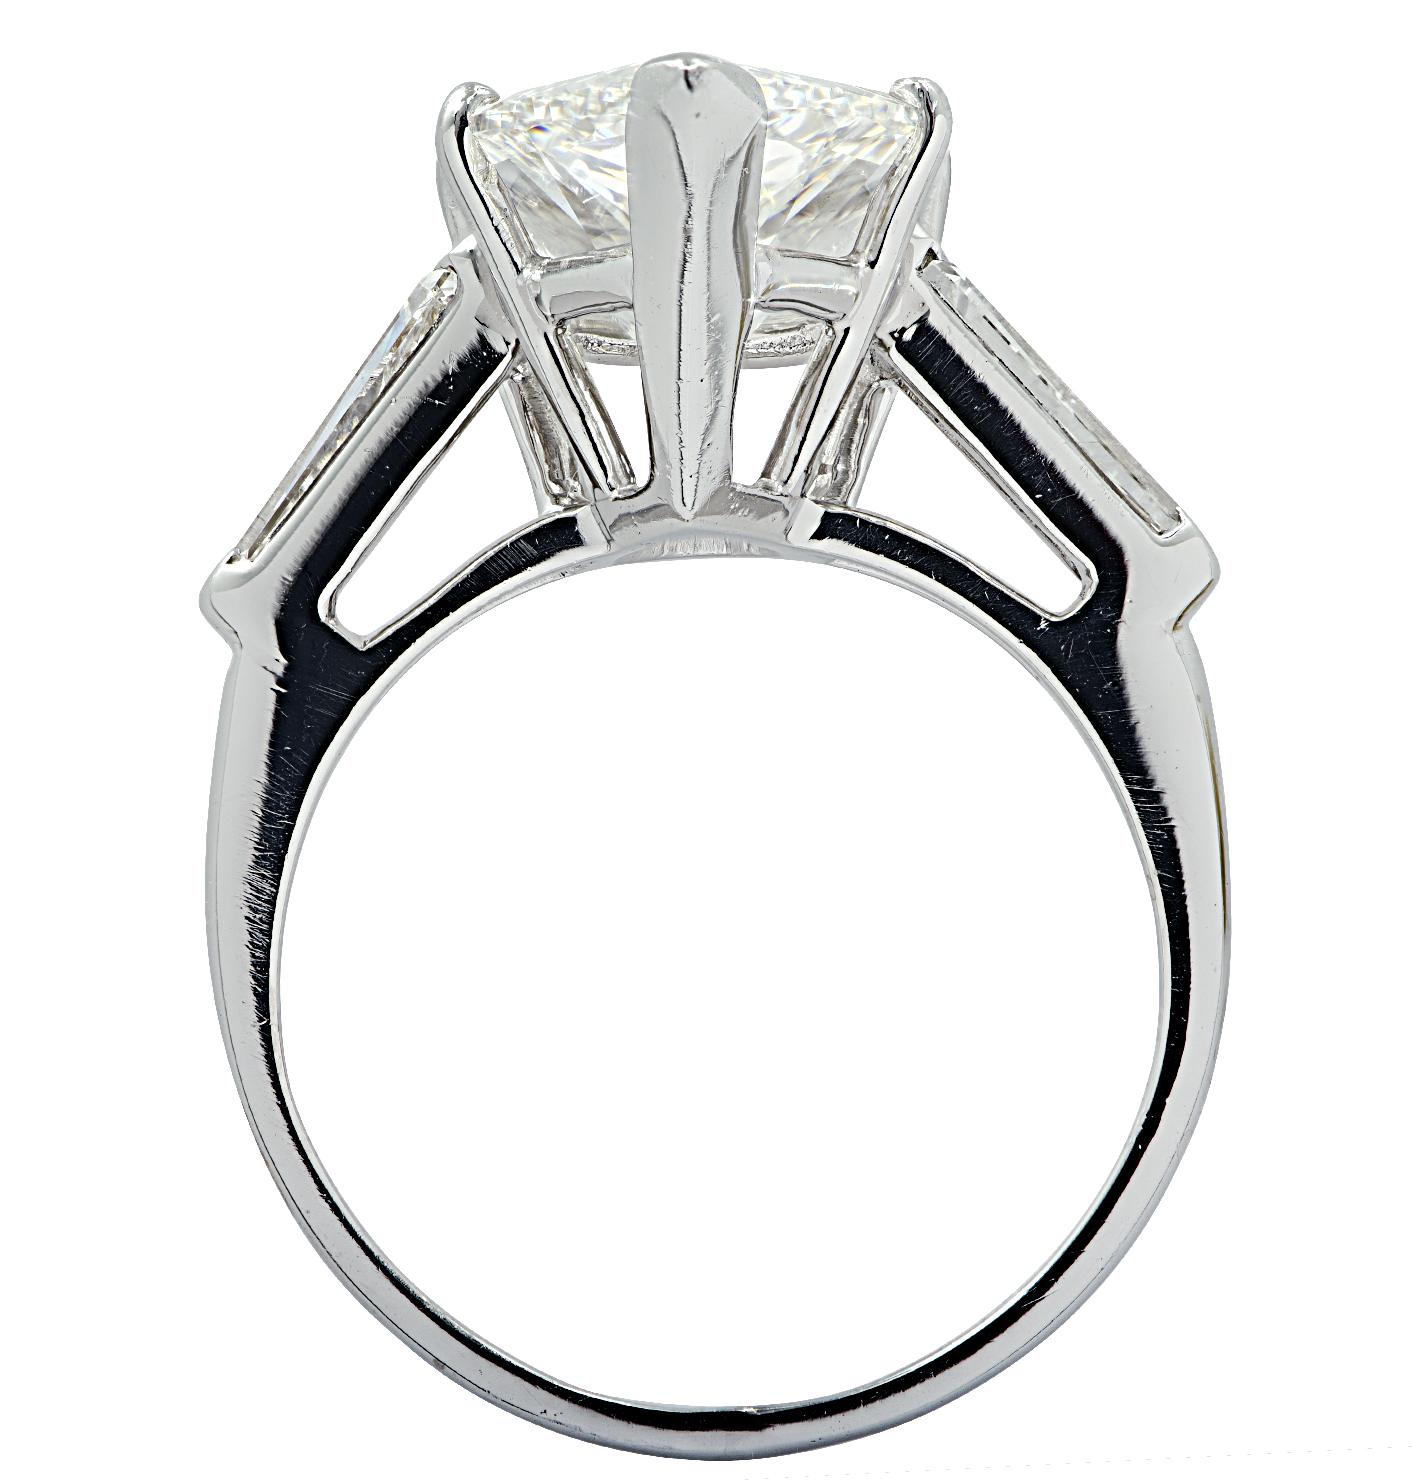 7 carat pear diamond ring